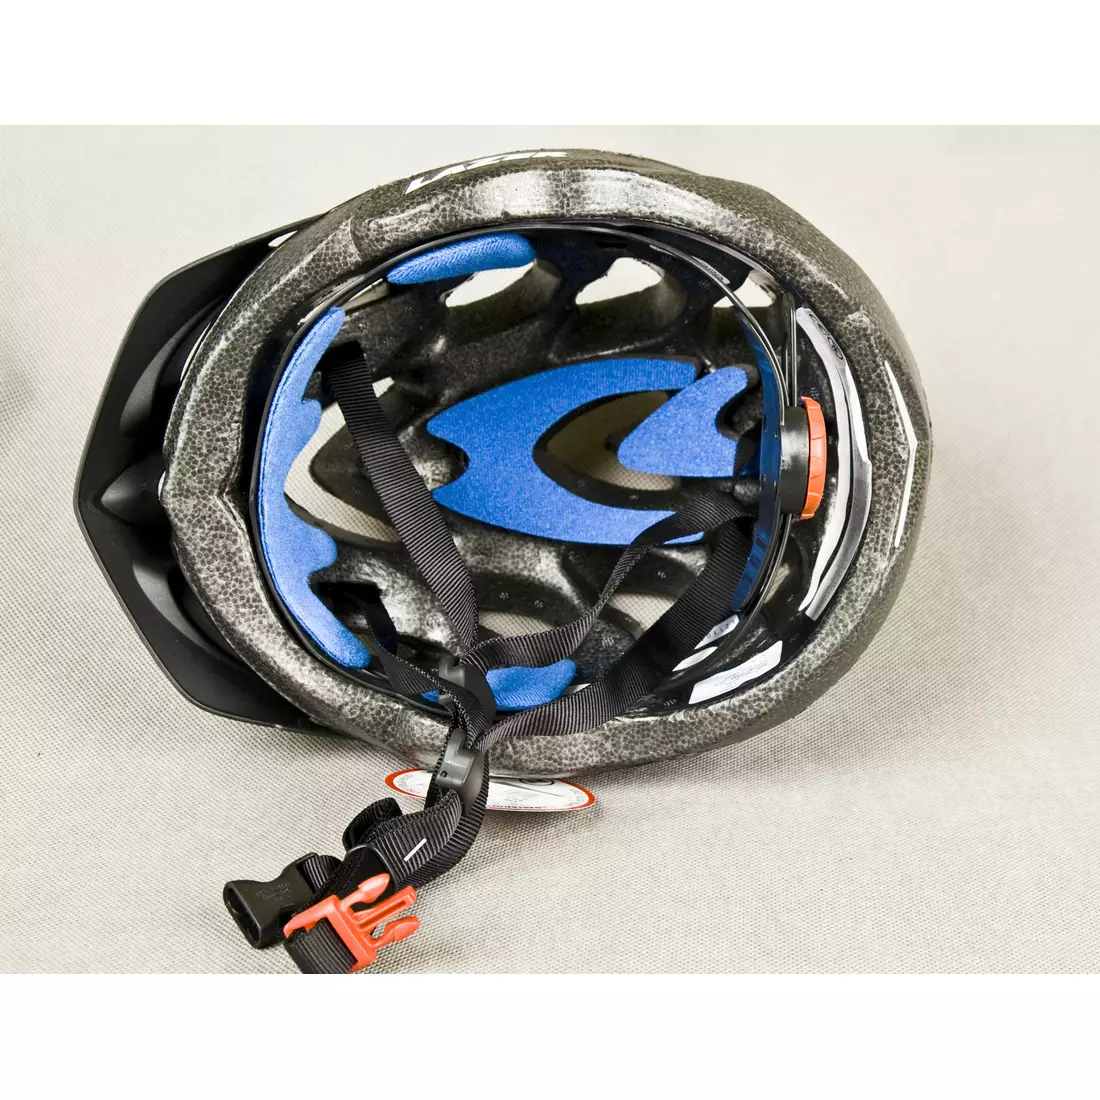 LAZER X3M MTB bicycle helmet, black